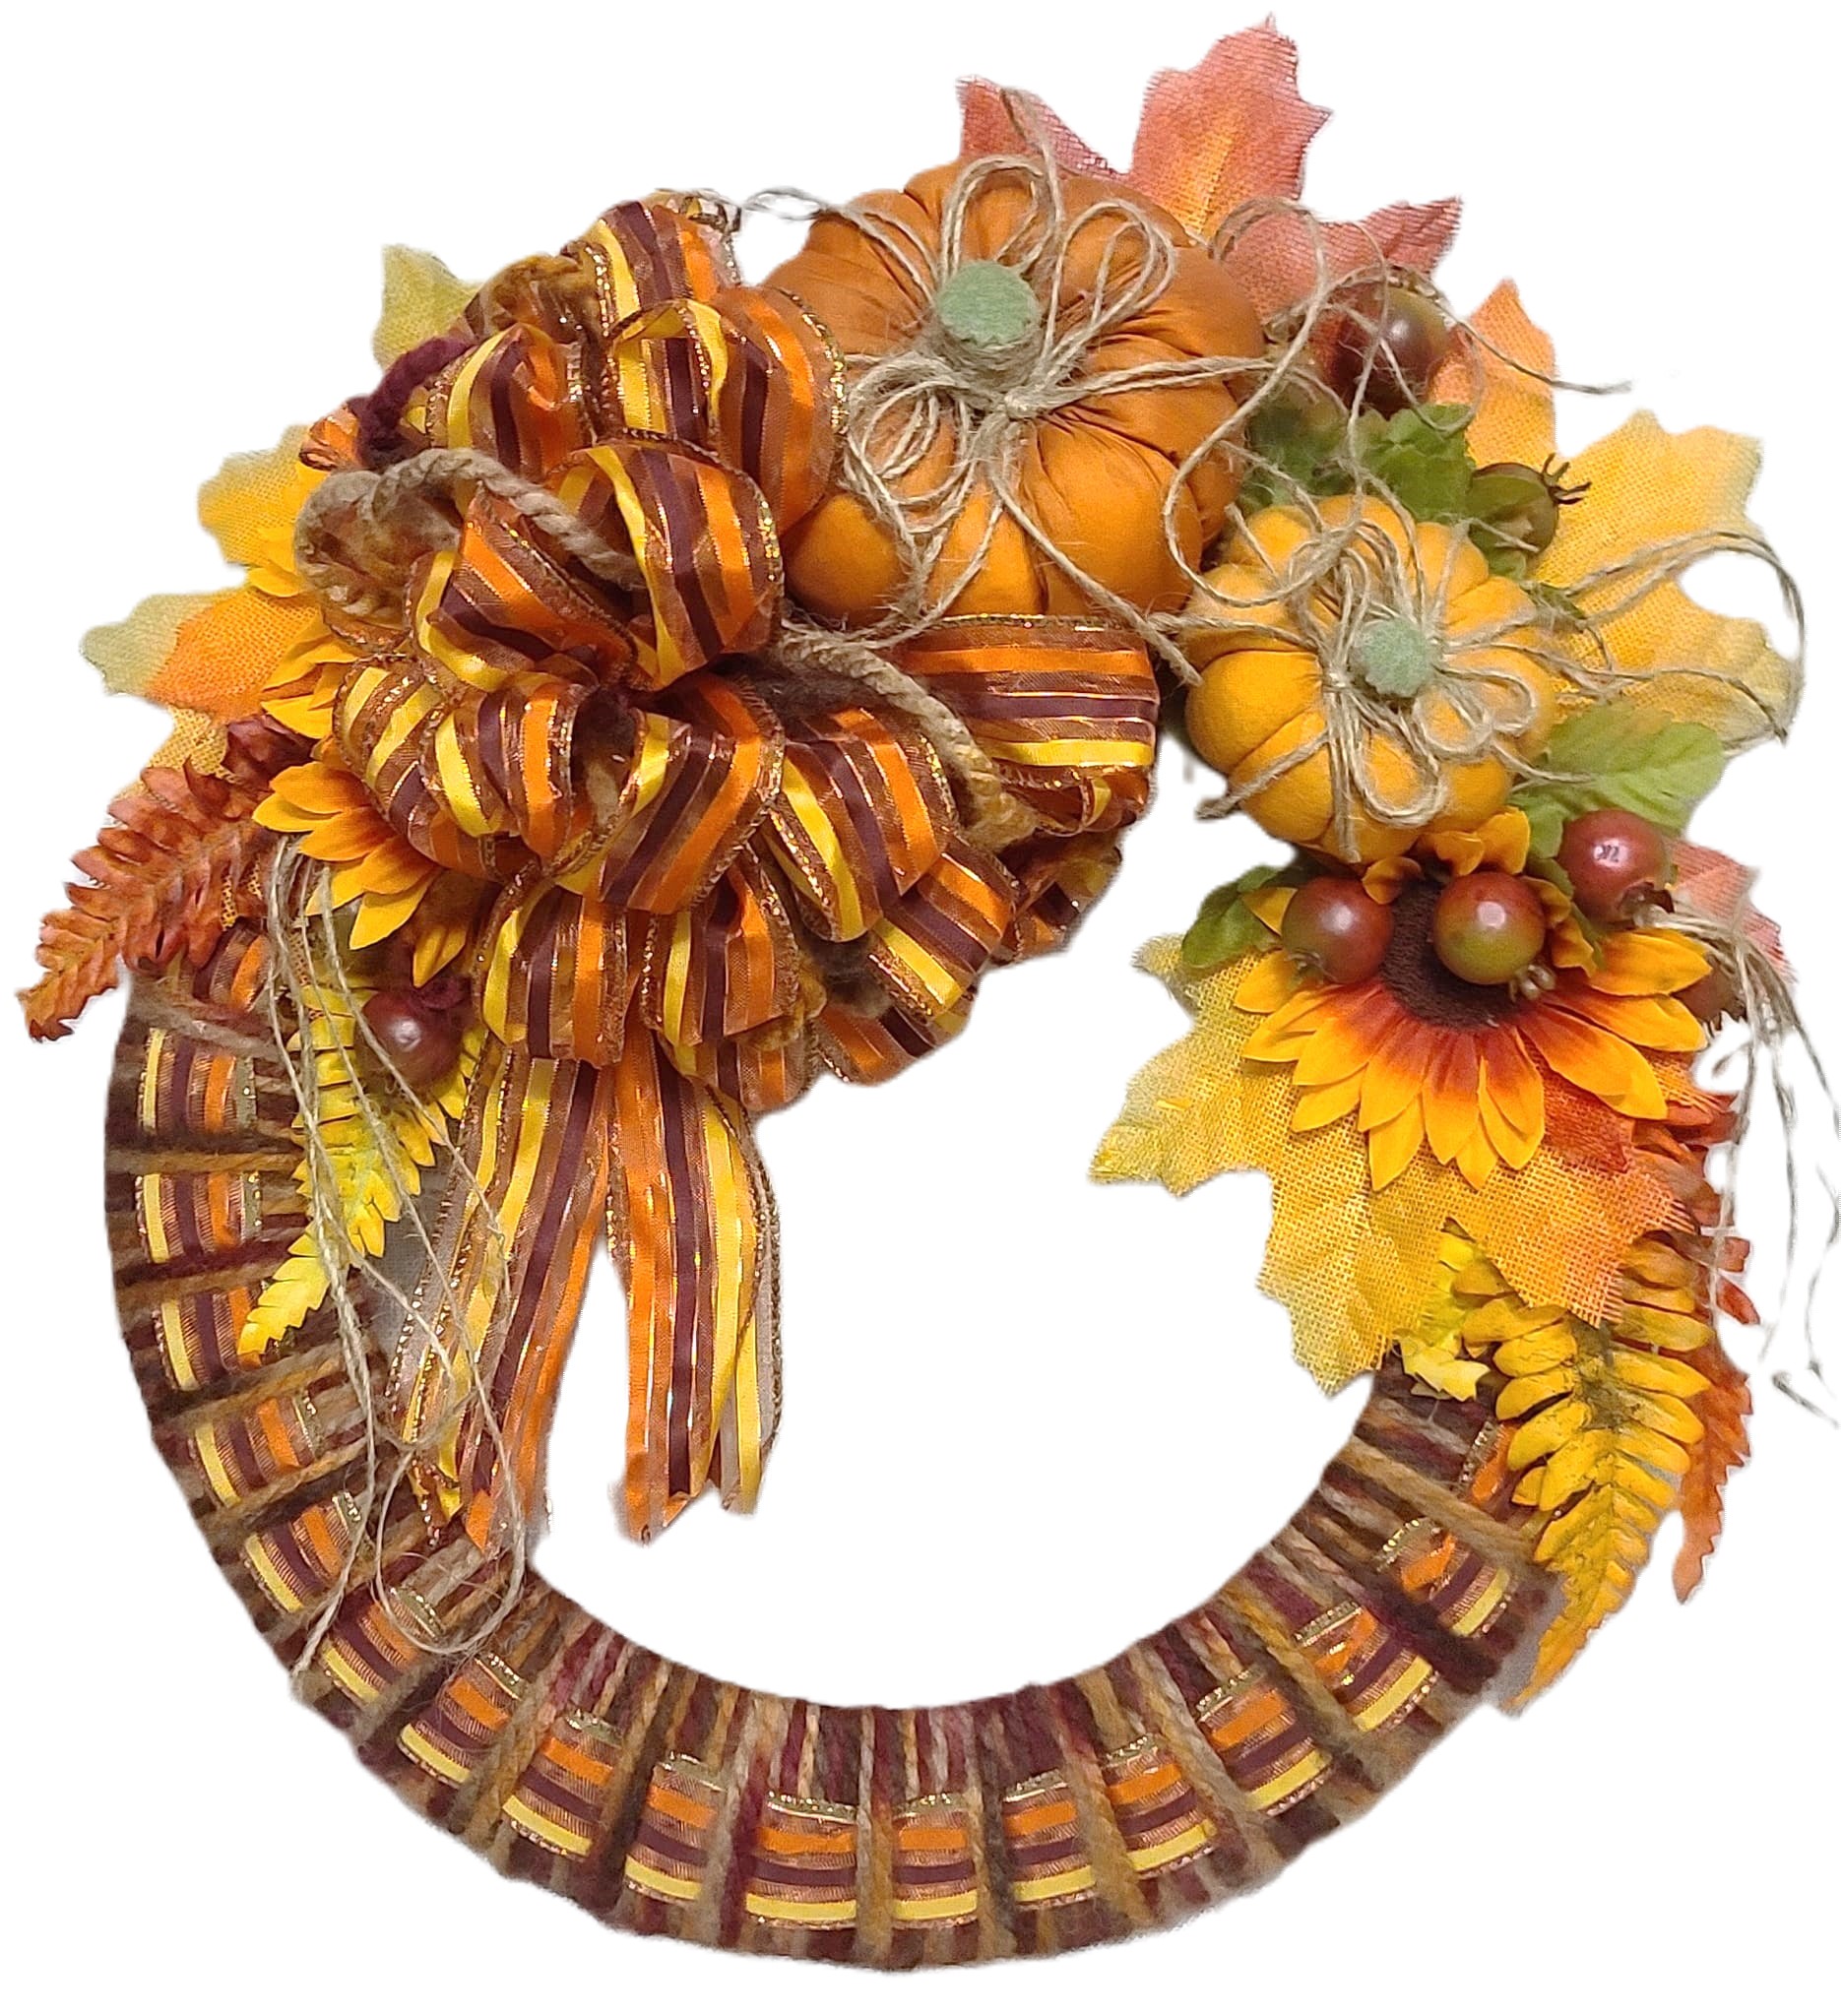 Yarn harvest wreath with pumpkins and foil foilage